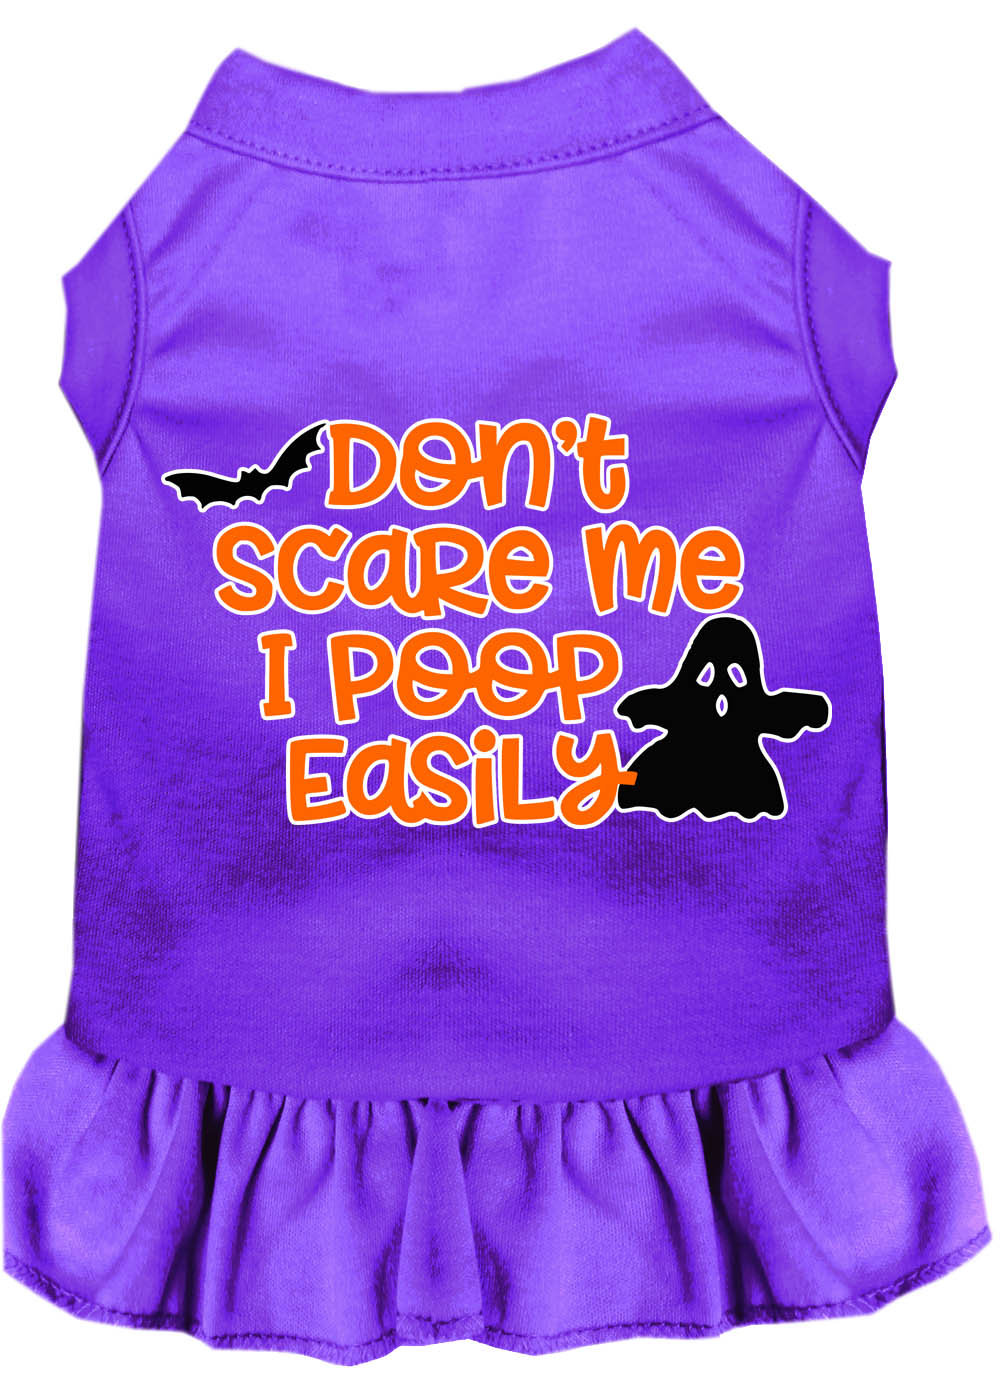 Don't Scare Me, Poops Easily Screen Print Dog Dress Purple XS